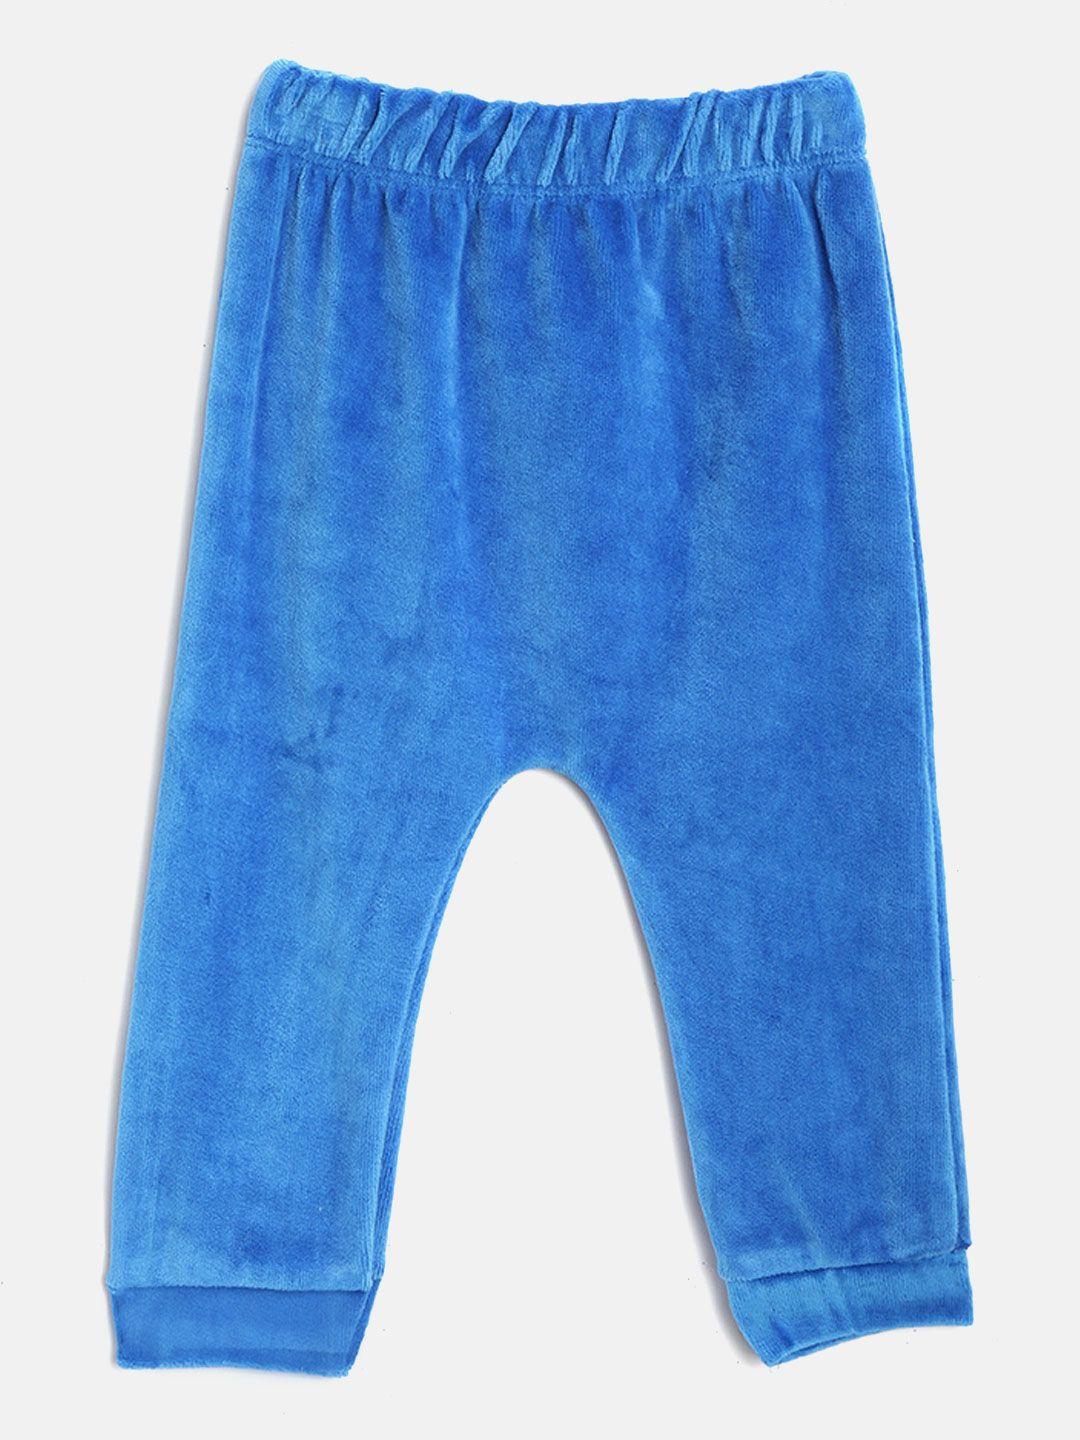 moms love boys blue solid velvet finish lounge pants with applique detail on back